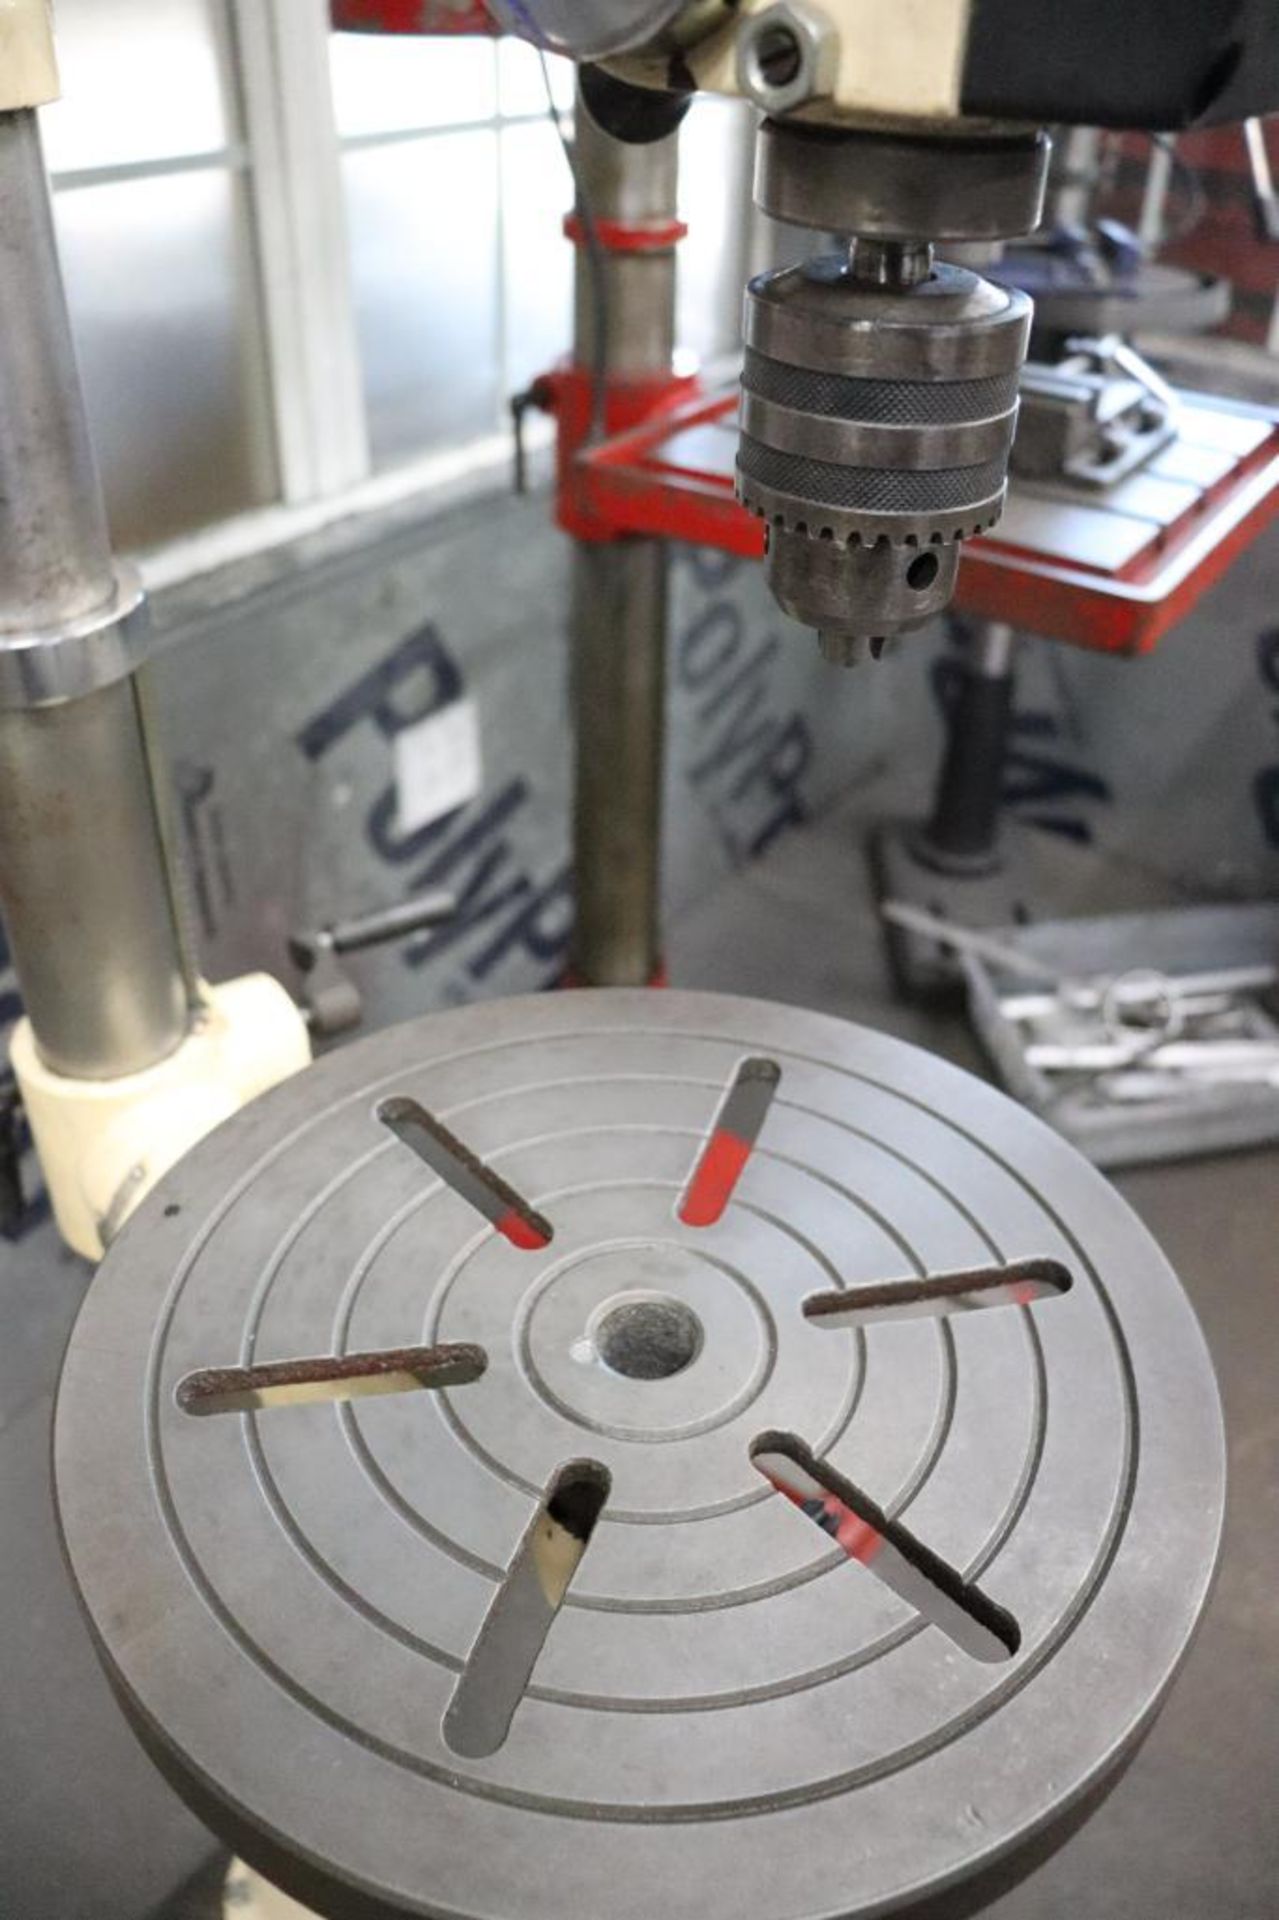 Shop Fox W1670 radial drill press - Image 5 of 7